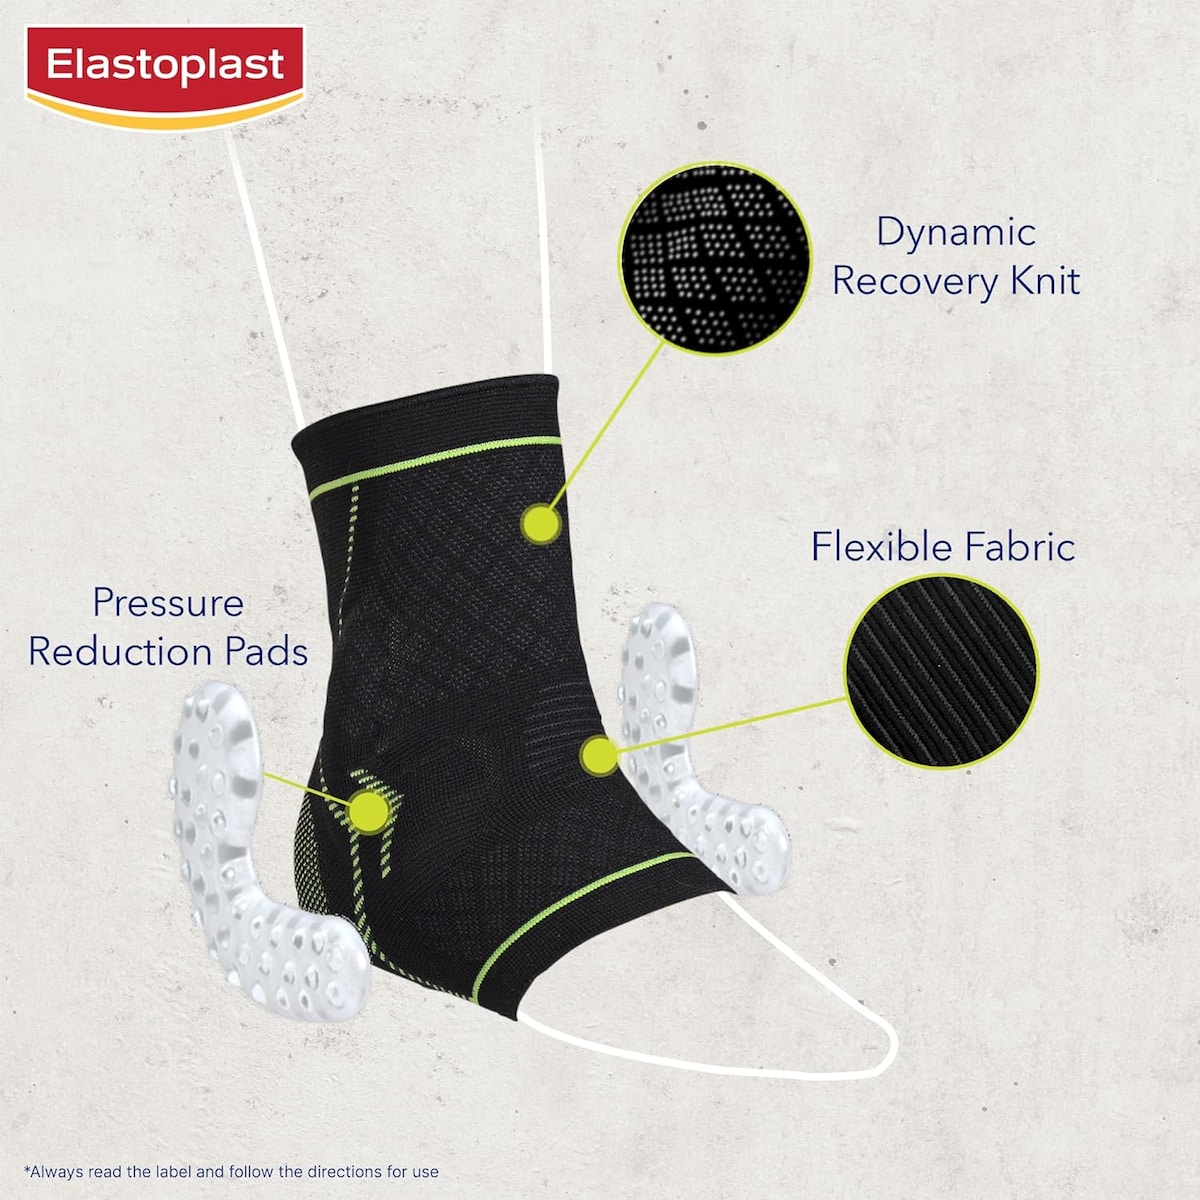 Elastoplast Advanced Ankle Support Medium 1 Support